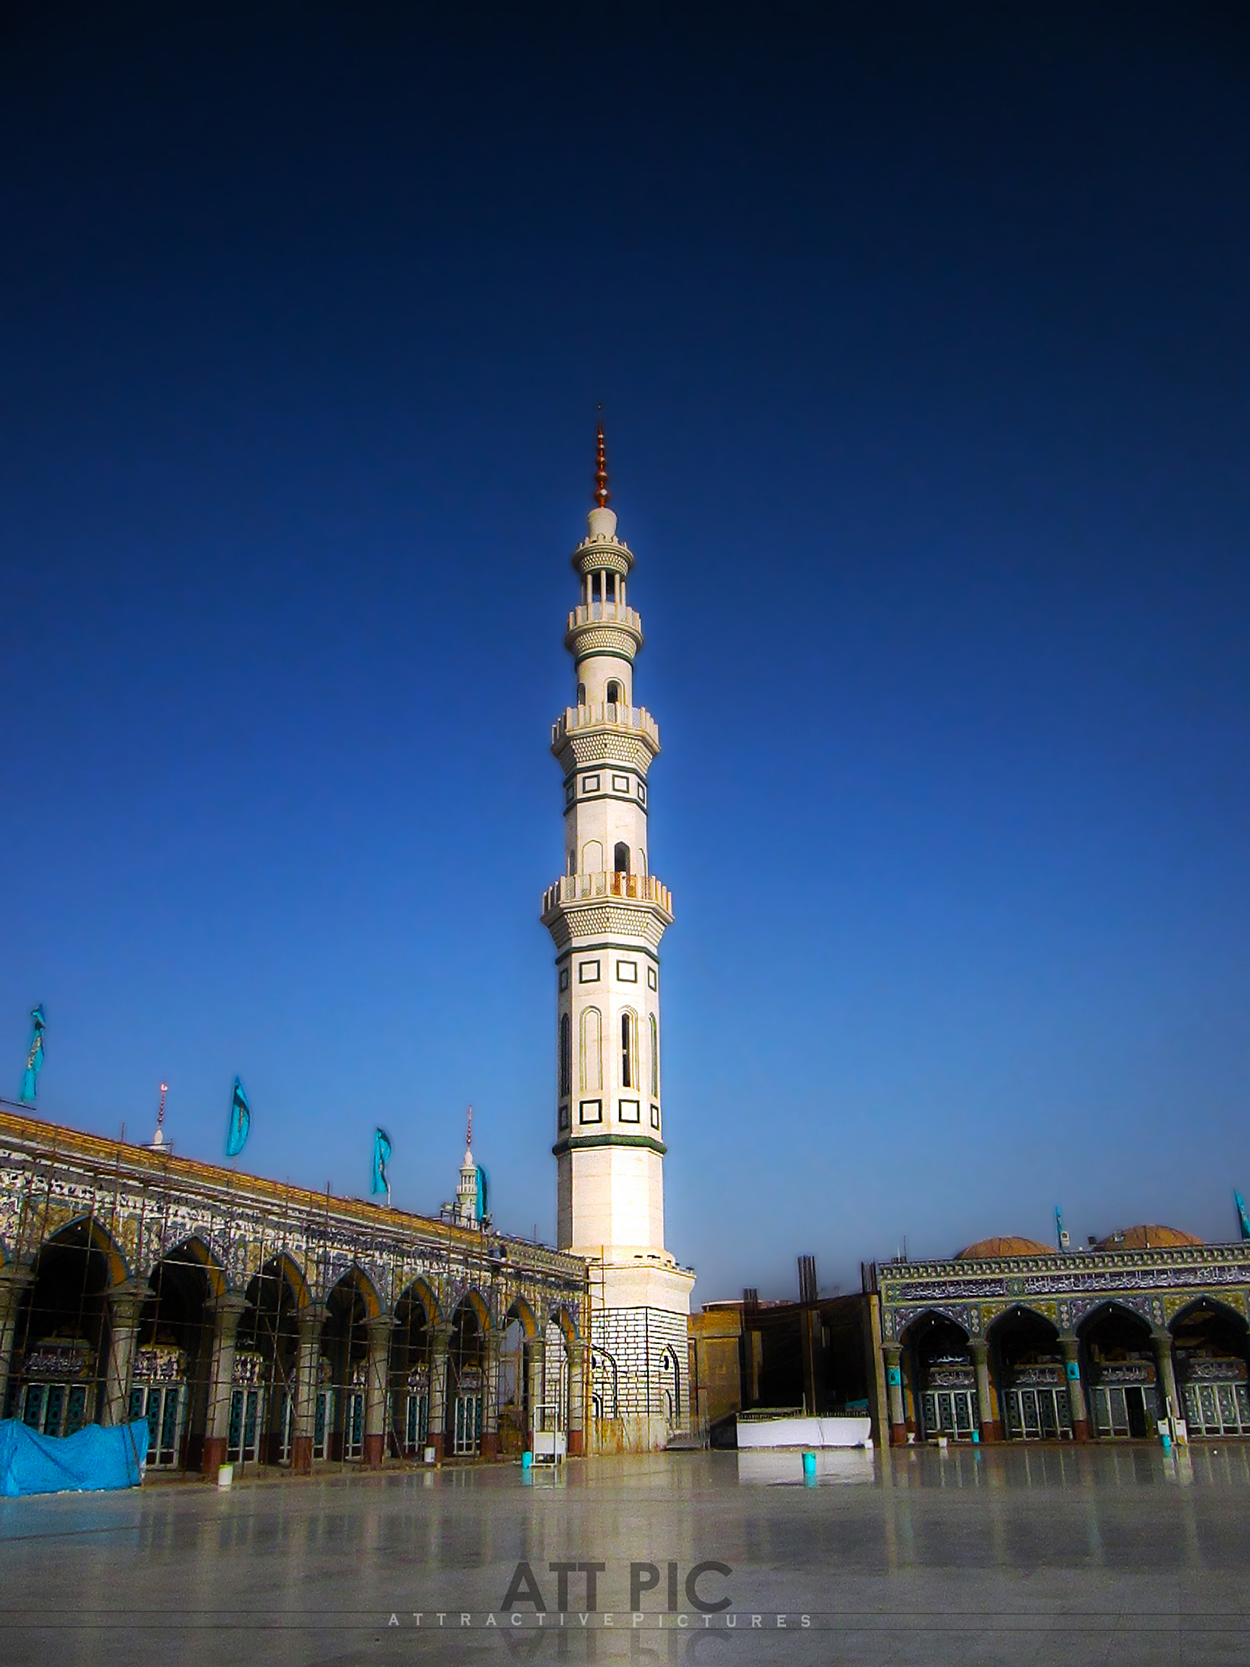 ATT PIC_Jamkaran mosque minarets